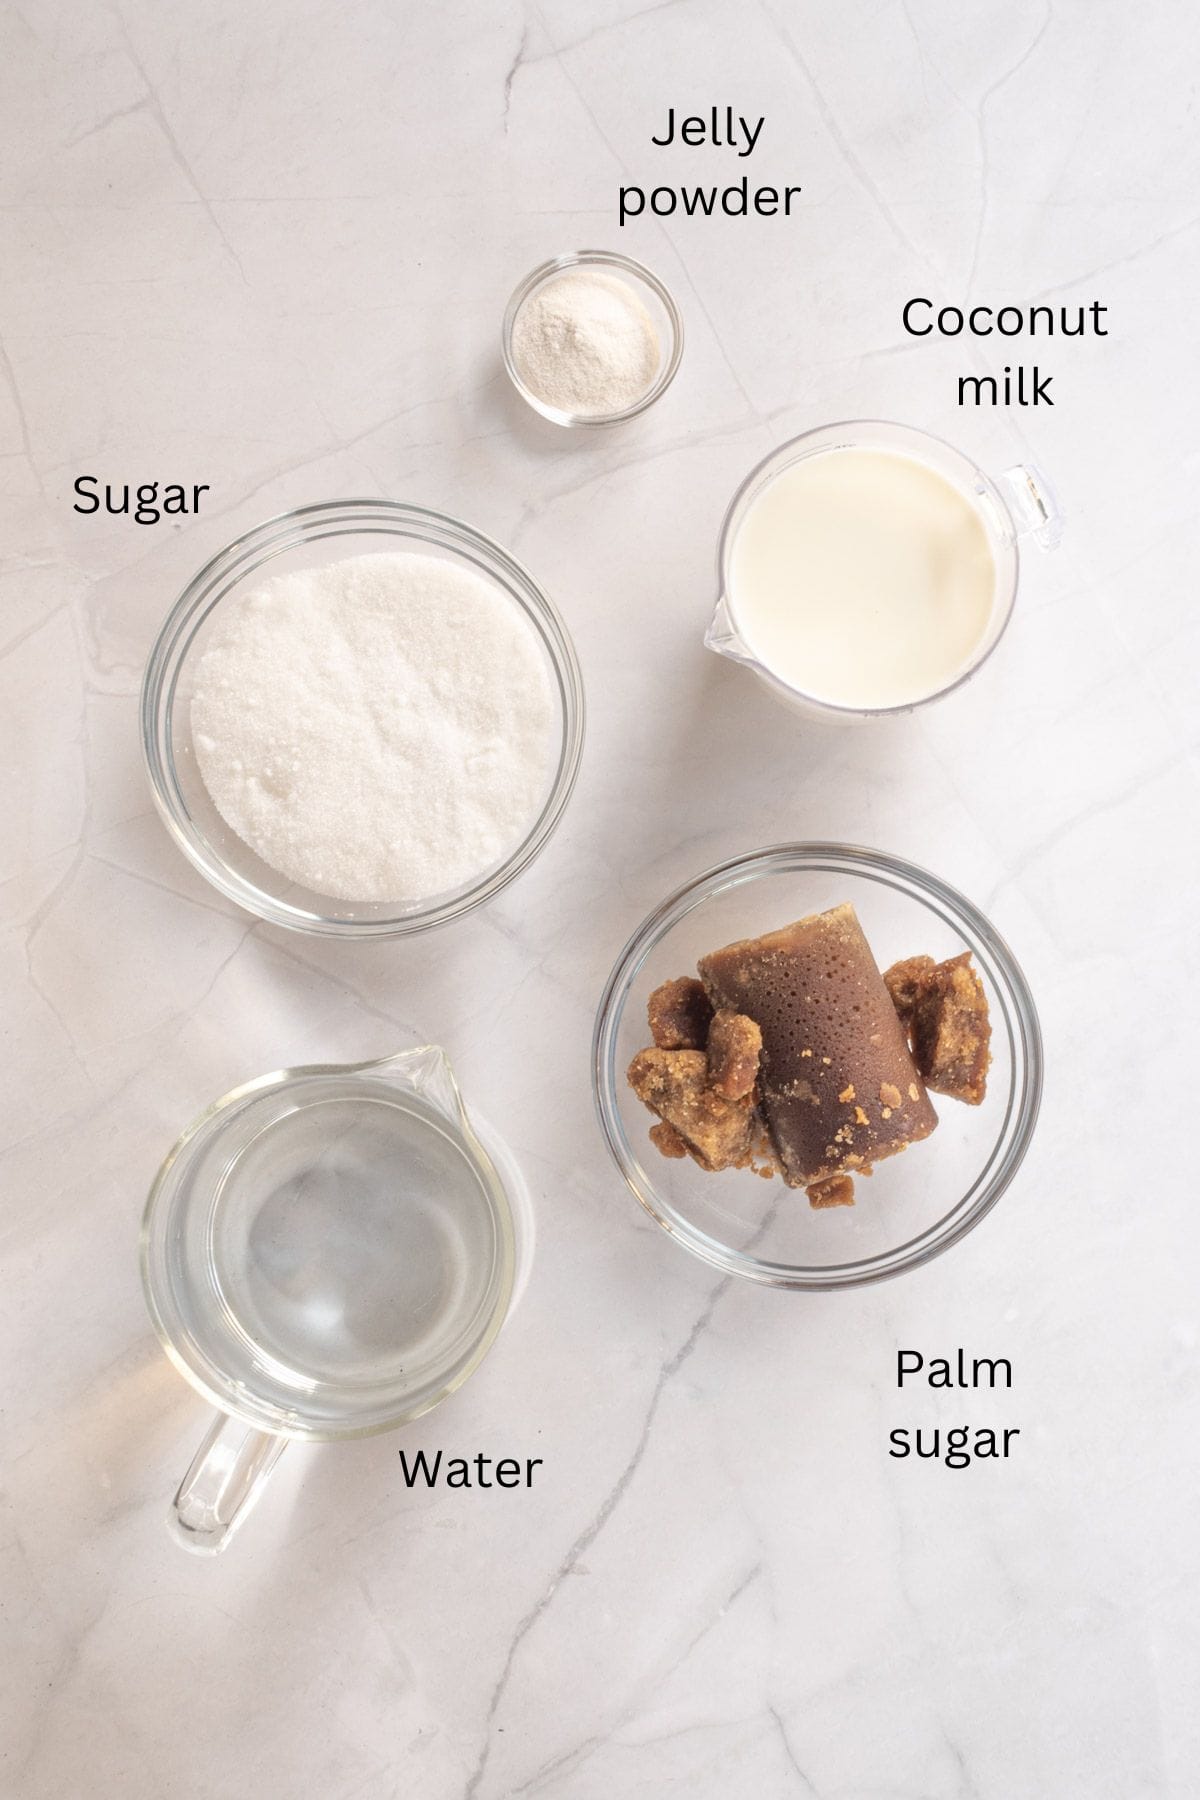 Agar agar powder, gula melaka (palm sugar), water, sugar and coconut milk against a marble background.